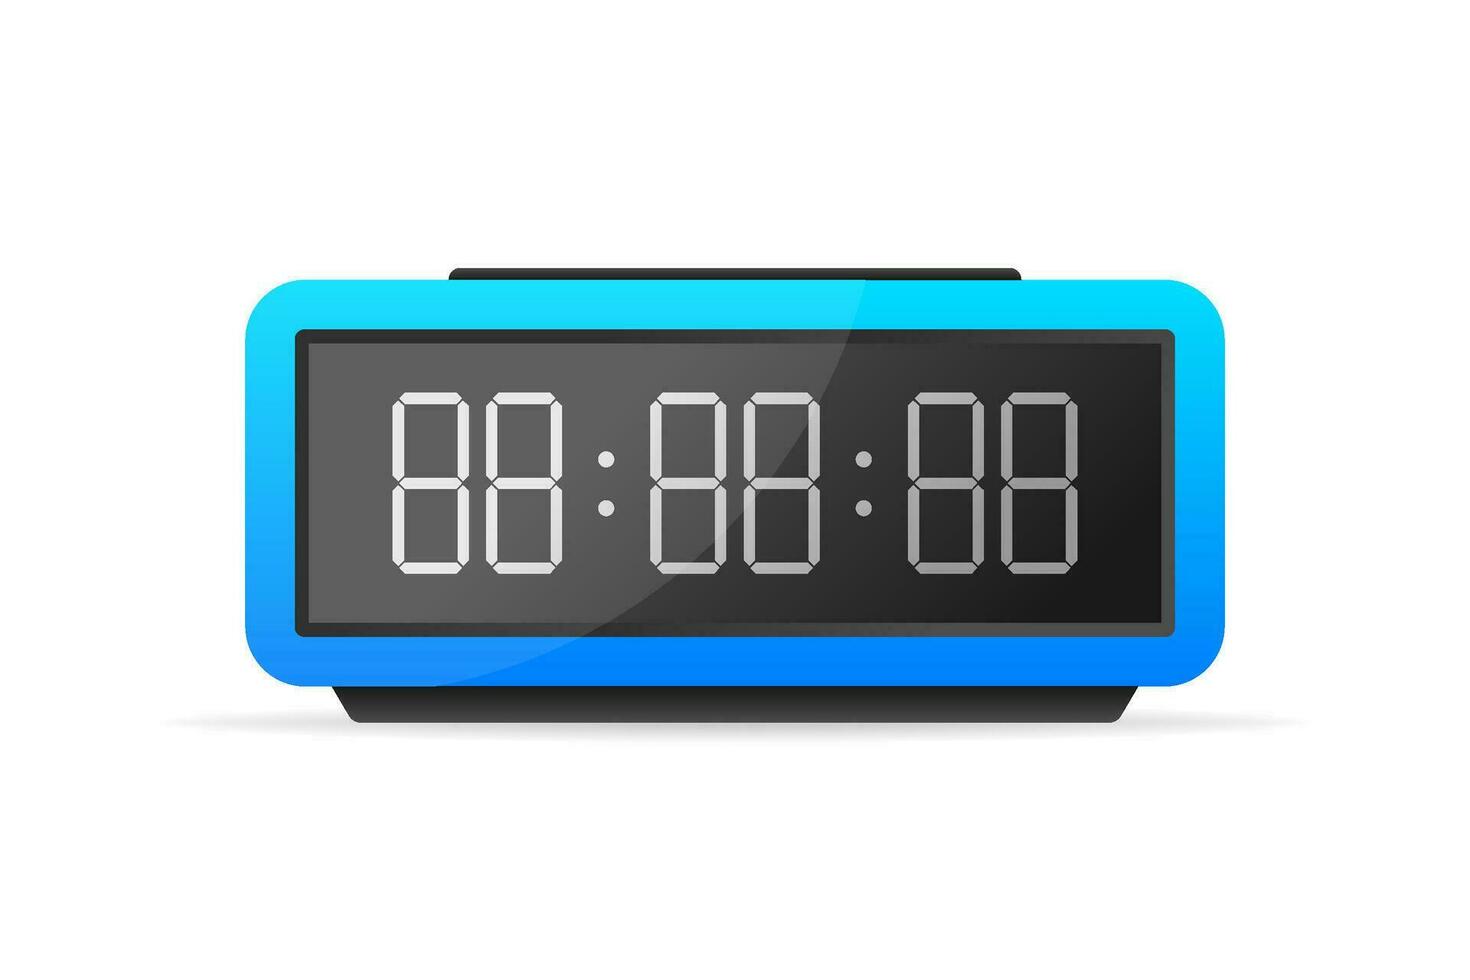 Flat digital clock illustration on white background. Phone icon set. Flat vector illustration